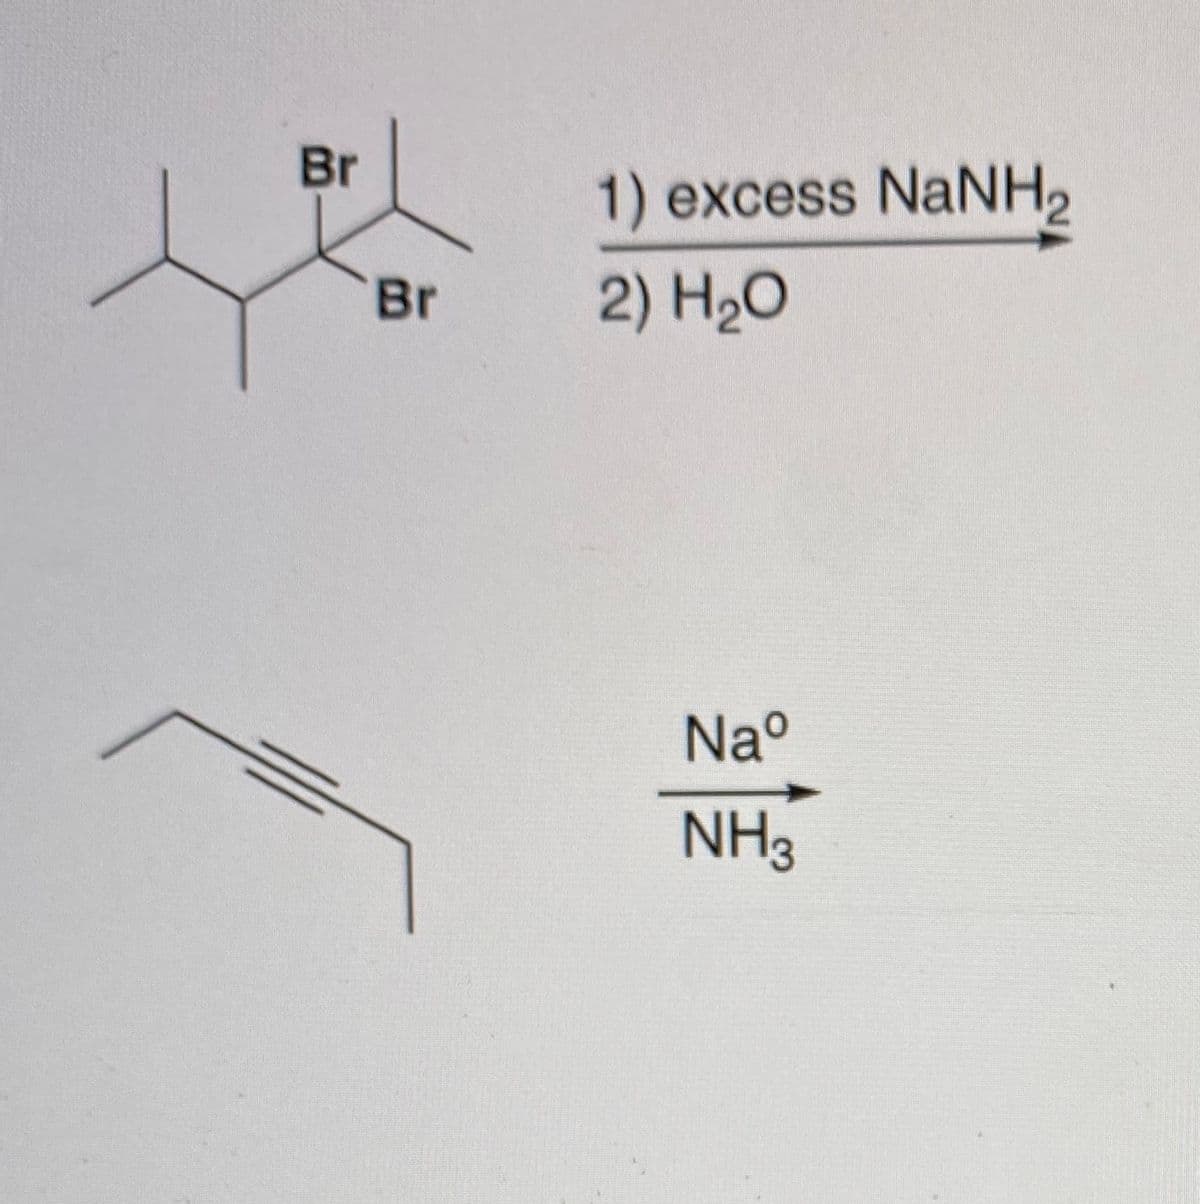 Br
1) excess NaNH2
Br
2) H20
Na°
NH3
